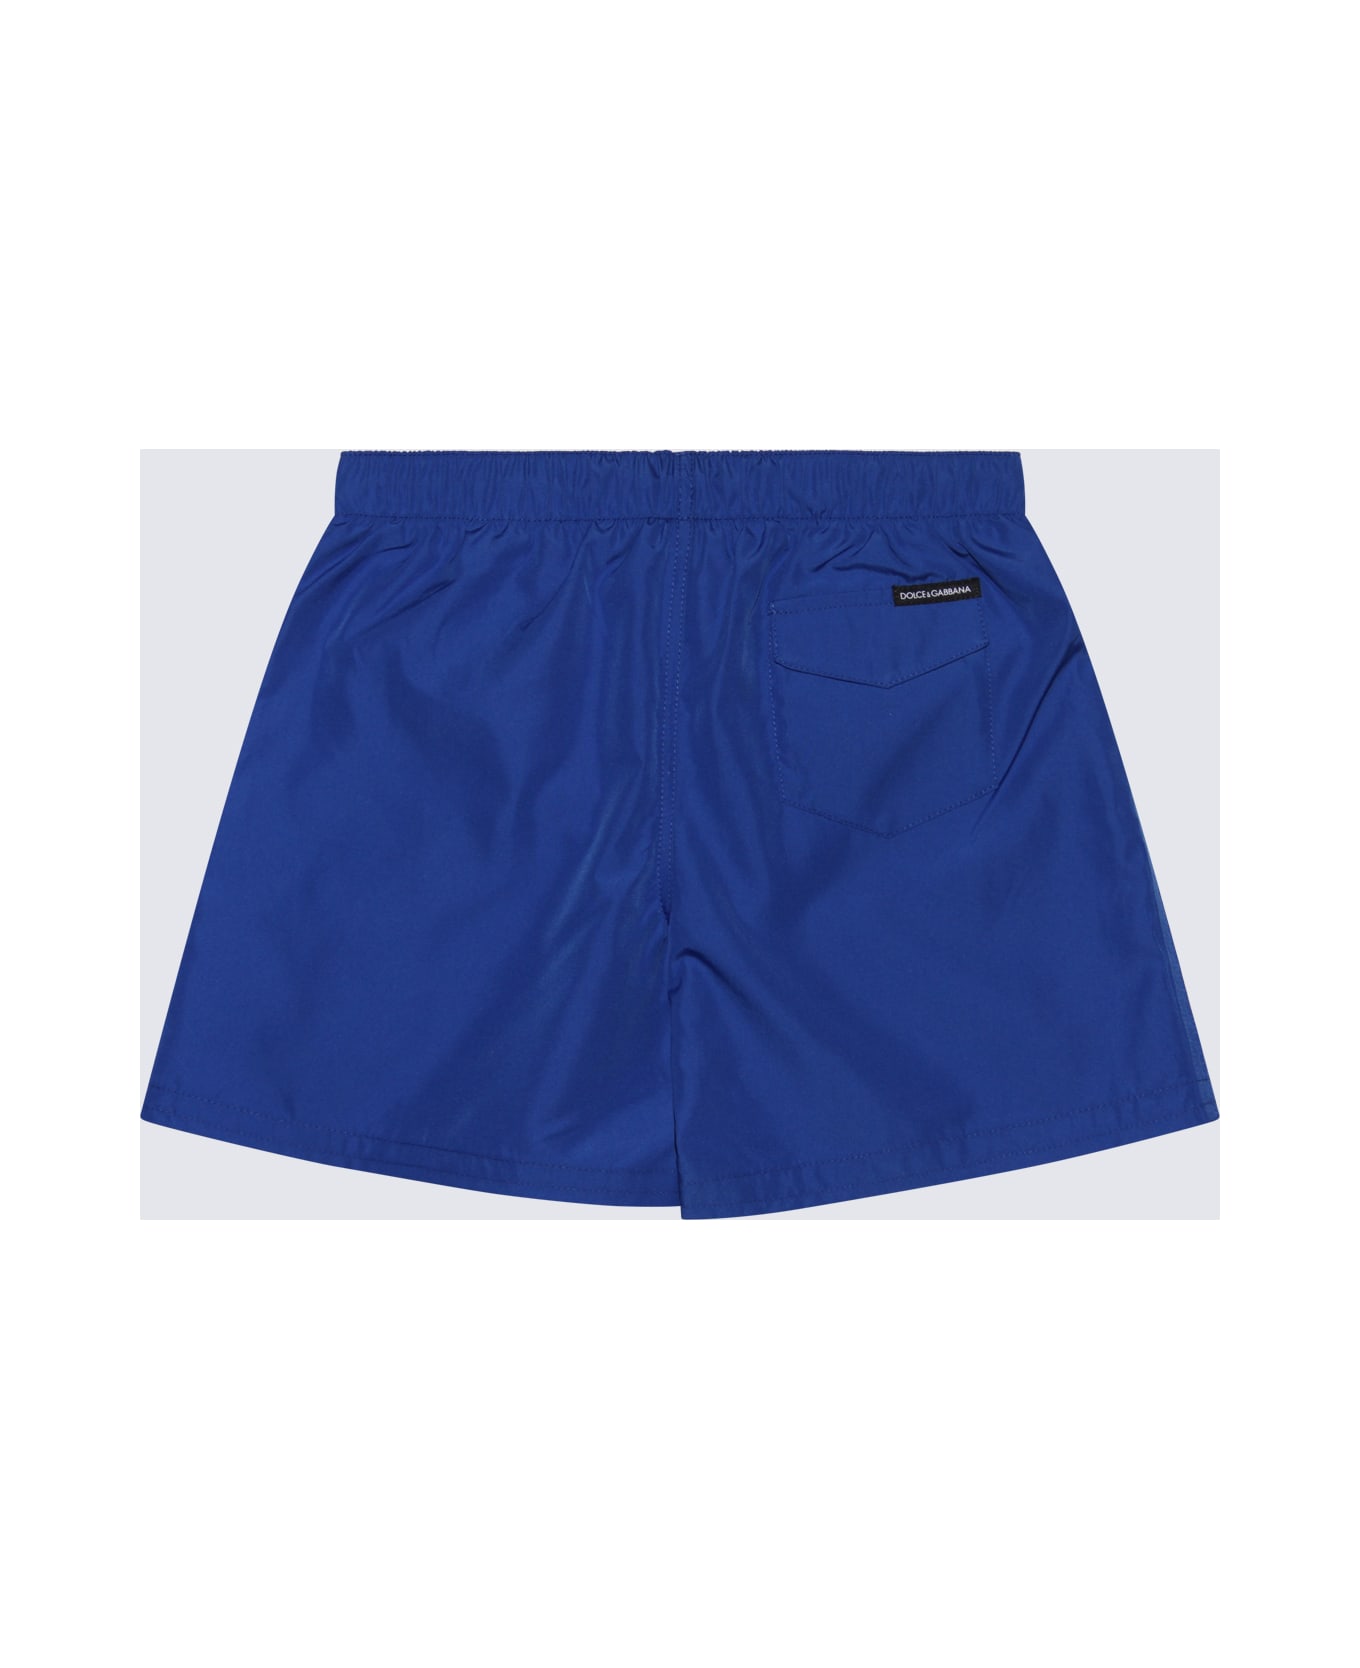 Dolce & Gabbana Blue Swim Shorts - BLUETTE MEDIO